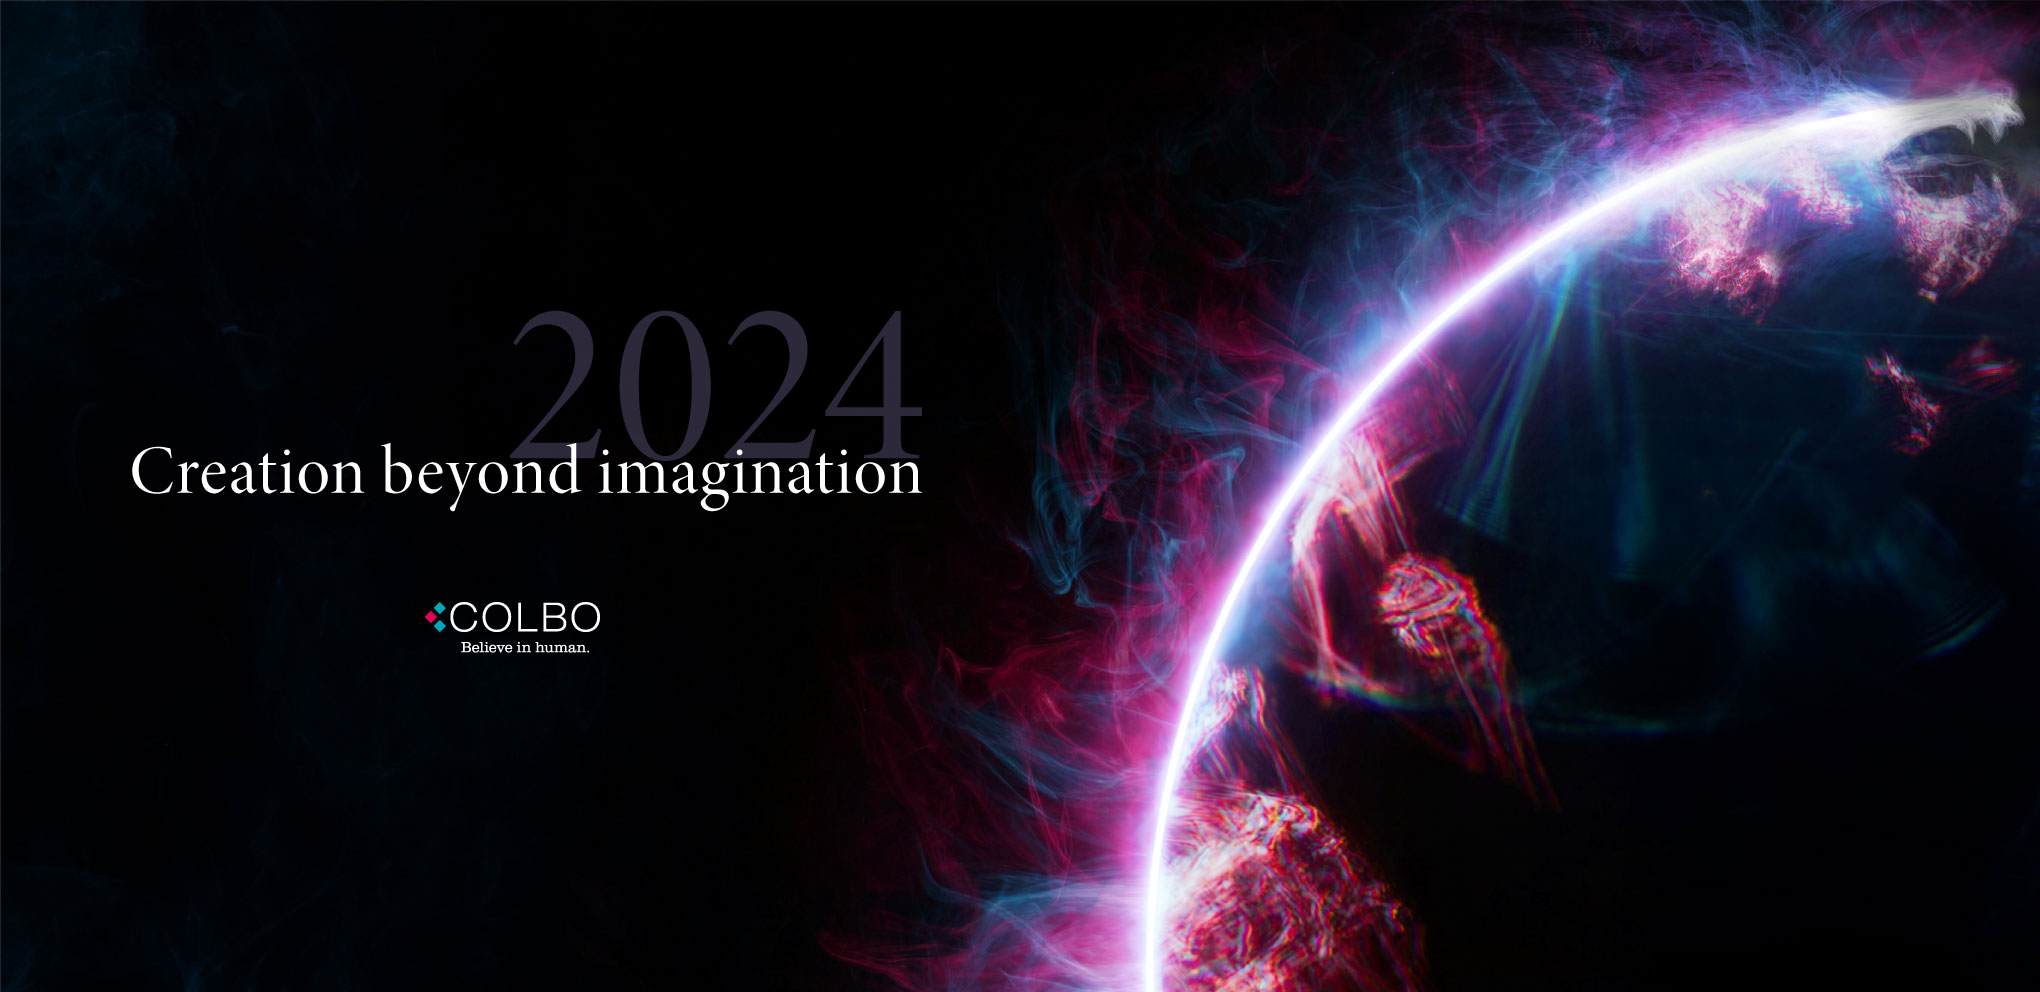 2024 Creation beyond imaginaion